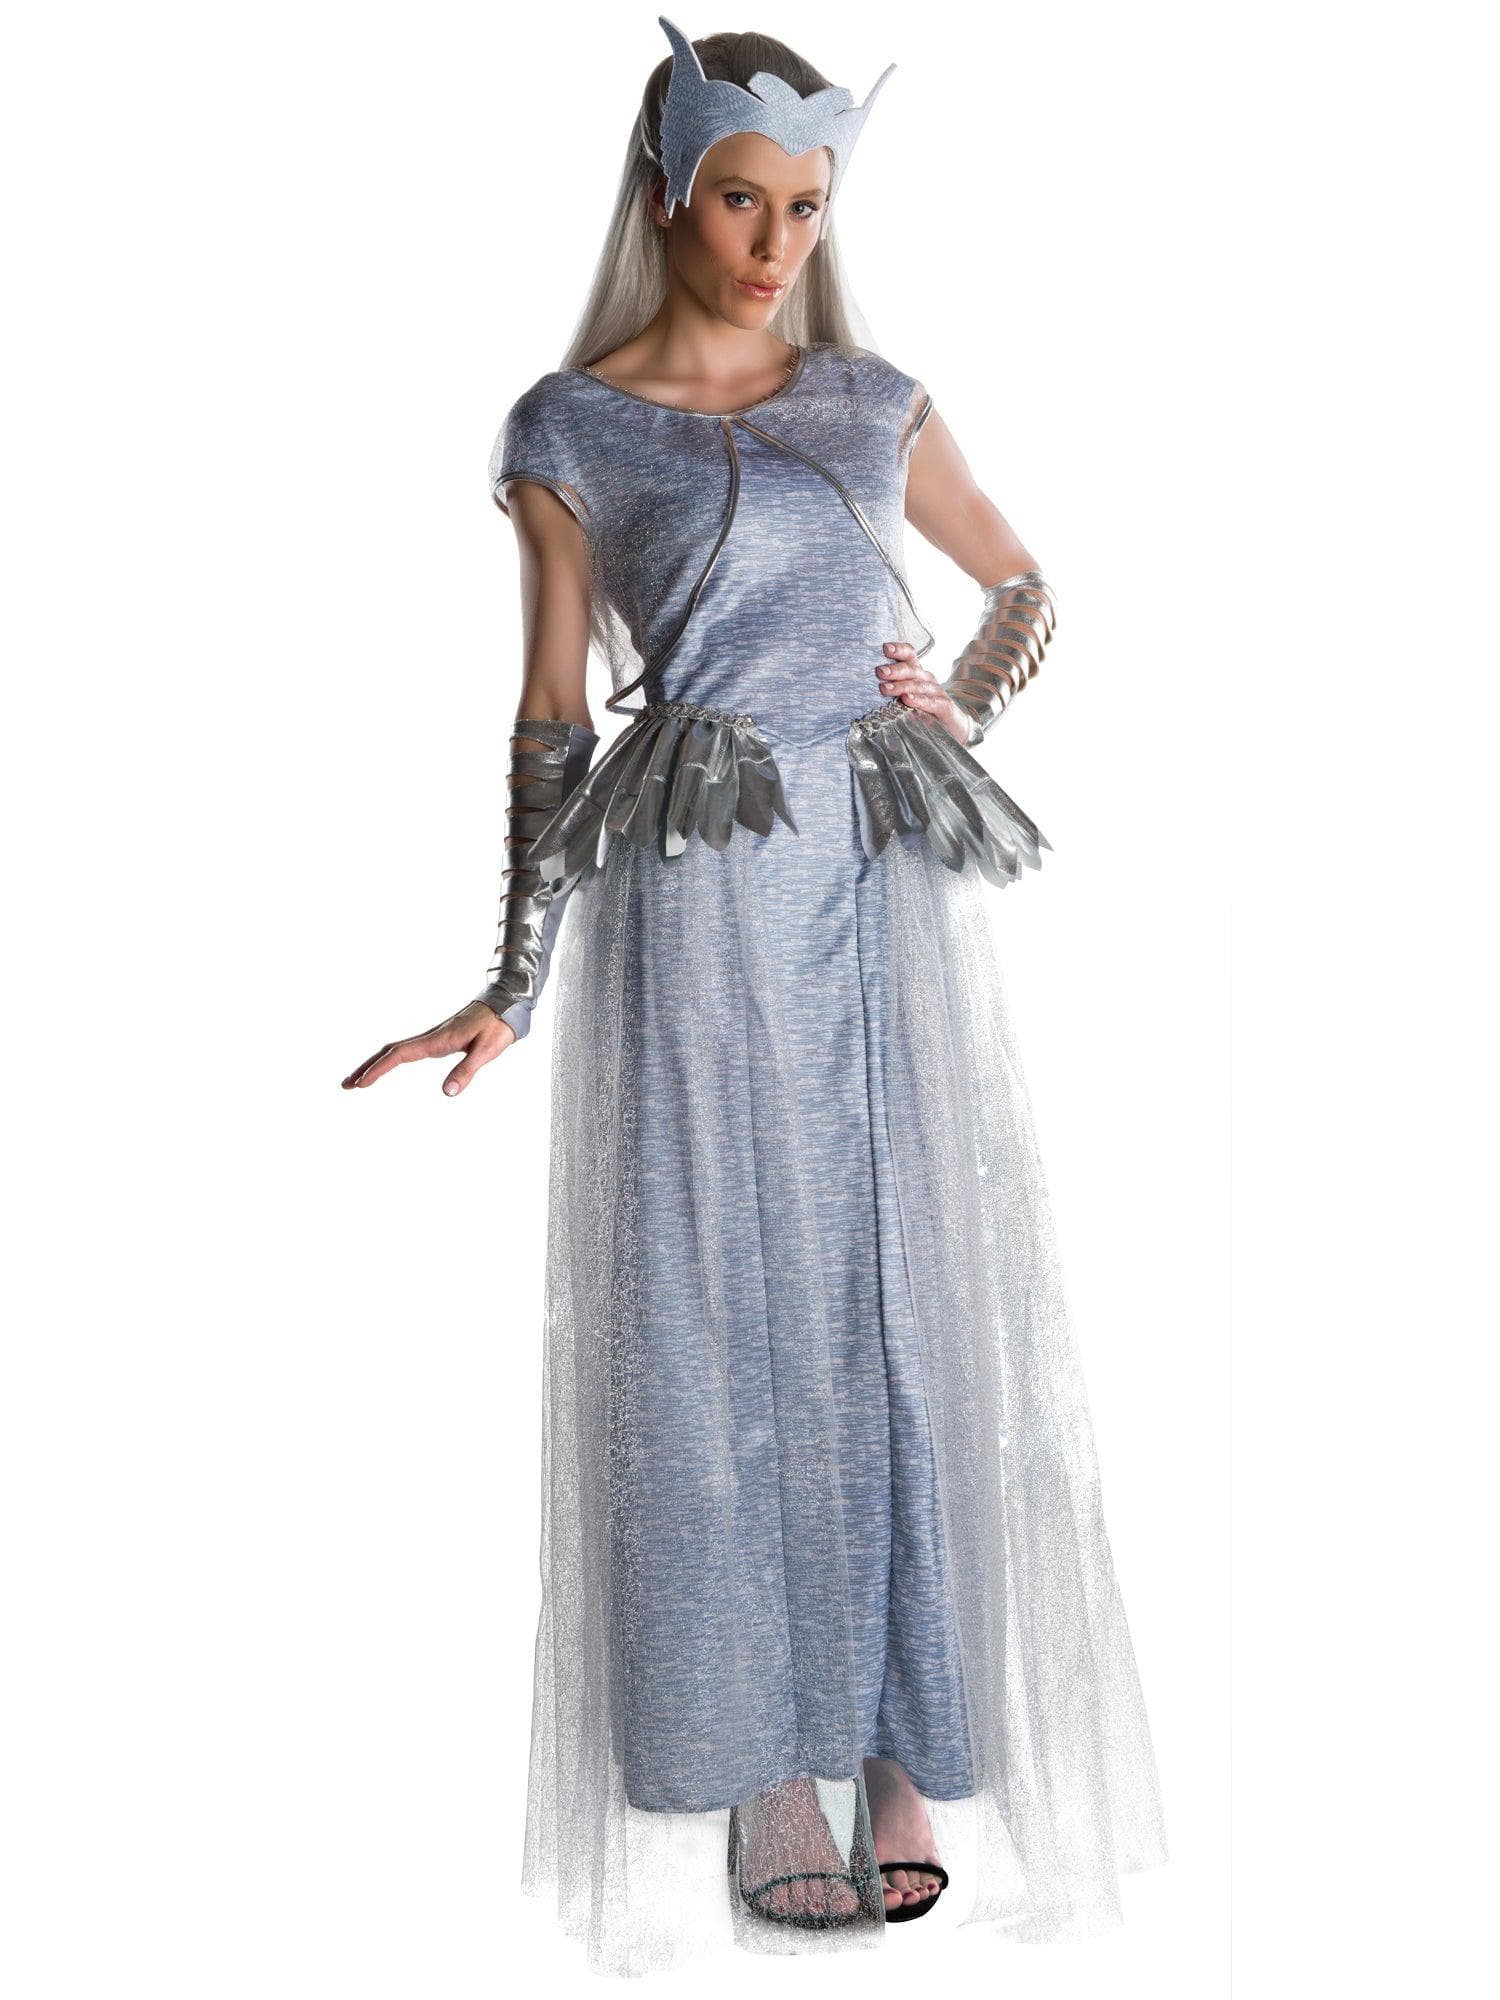 Women's Snow White and the Huntsman Queen Freya Costume - Deluxe - costumes.com